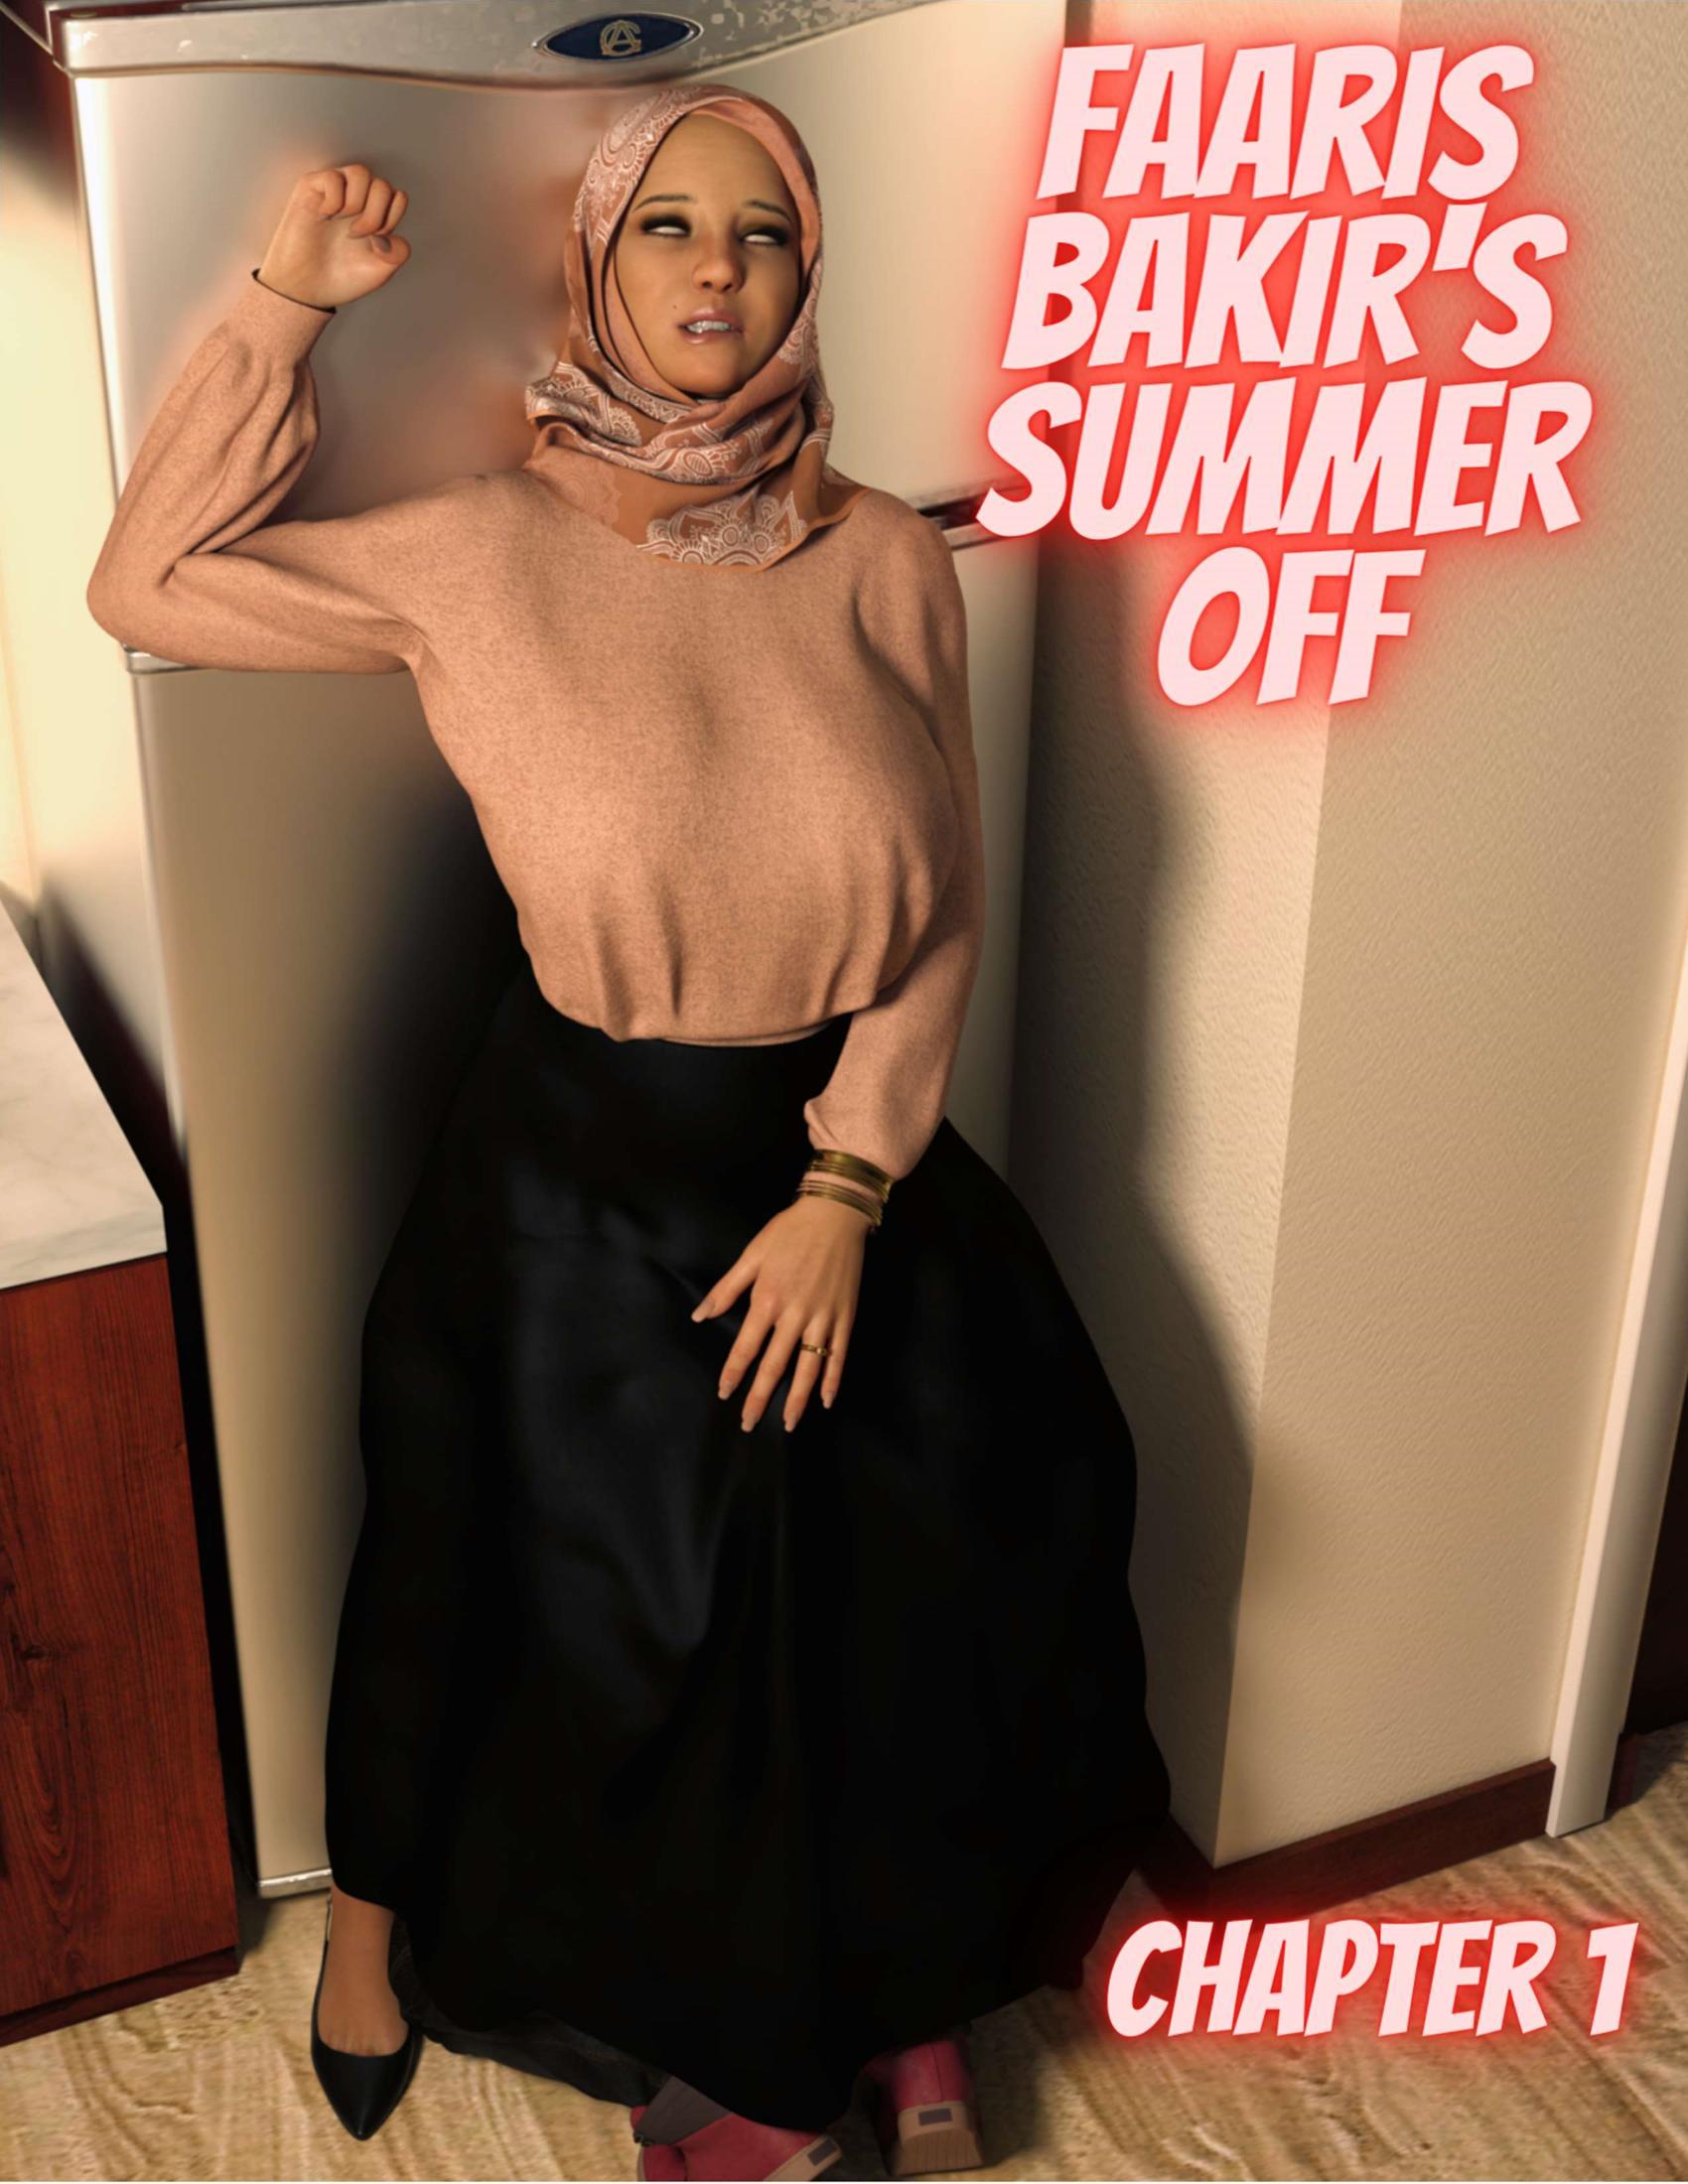 Redoxa Faaris Bakir S Summer Off Porn Comics Galleries